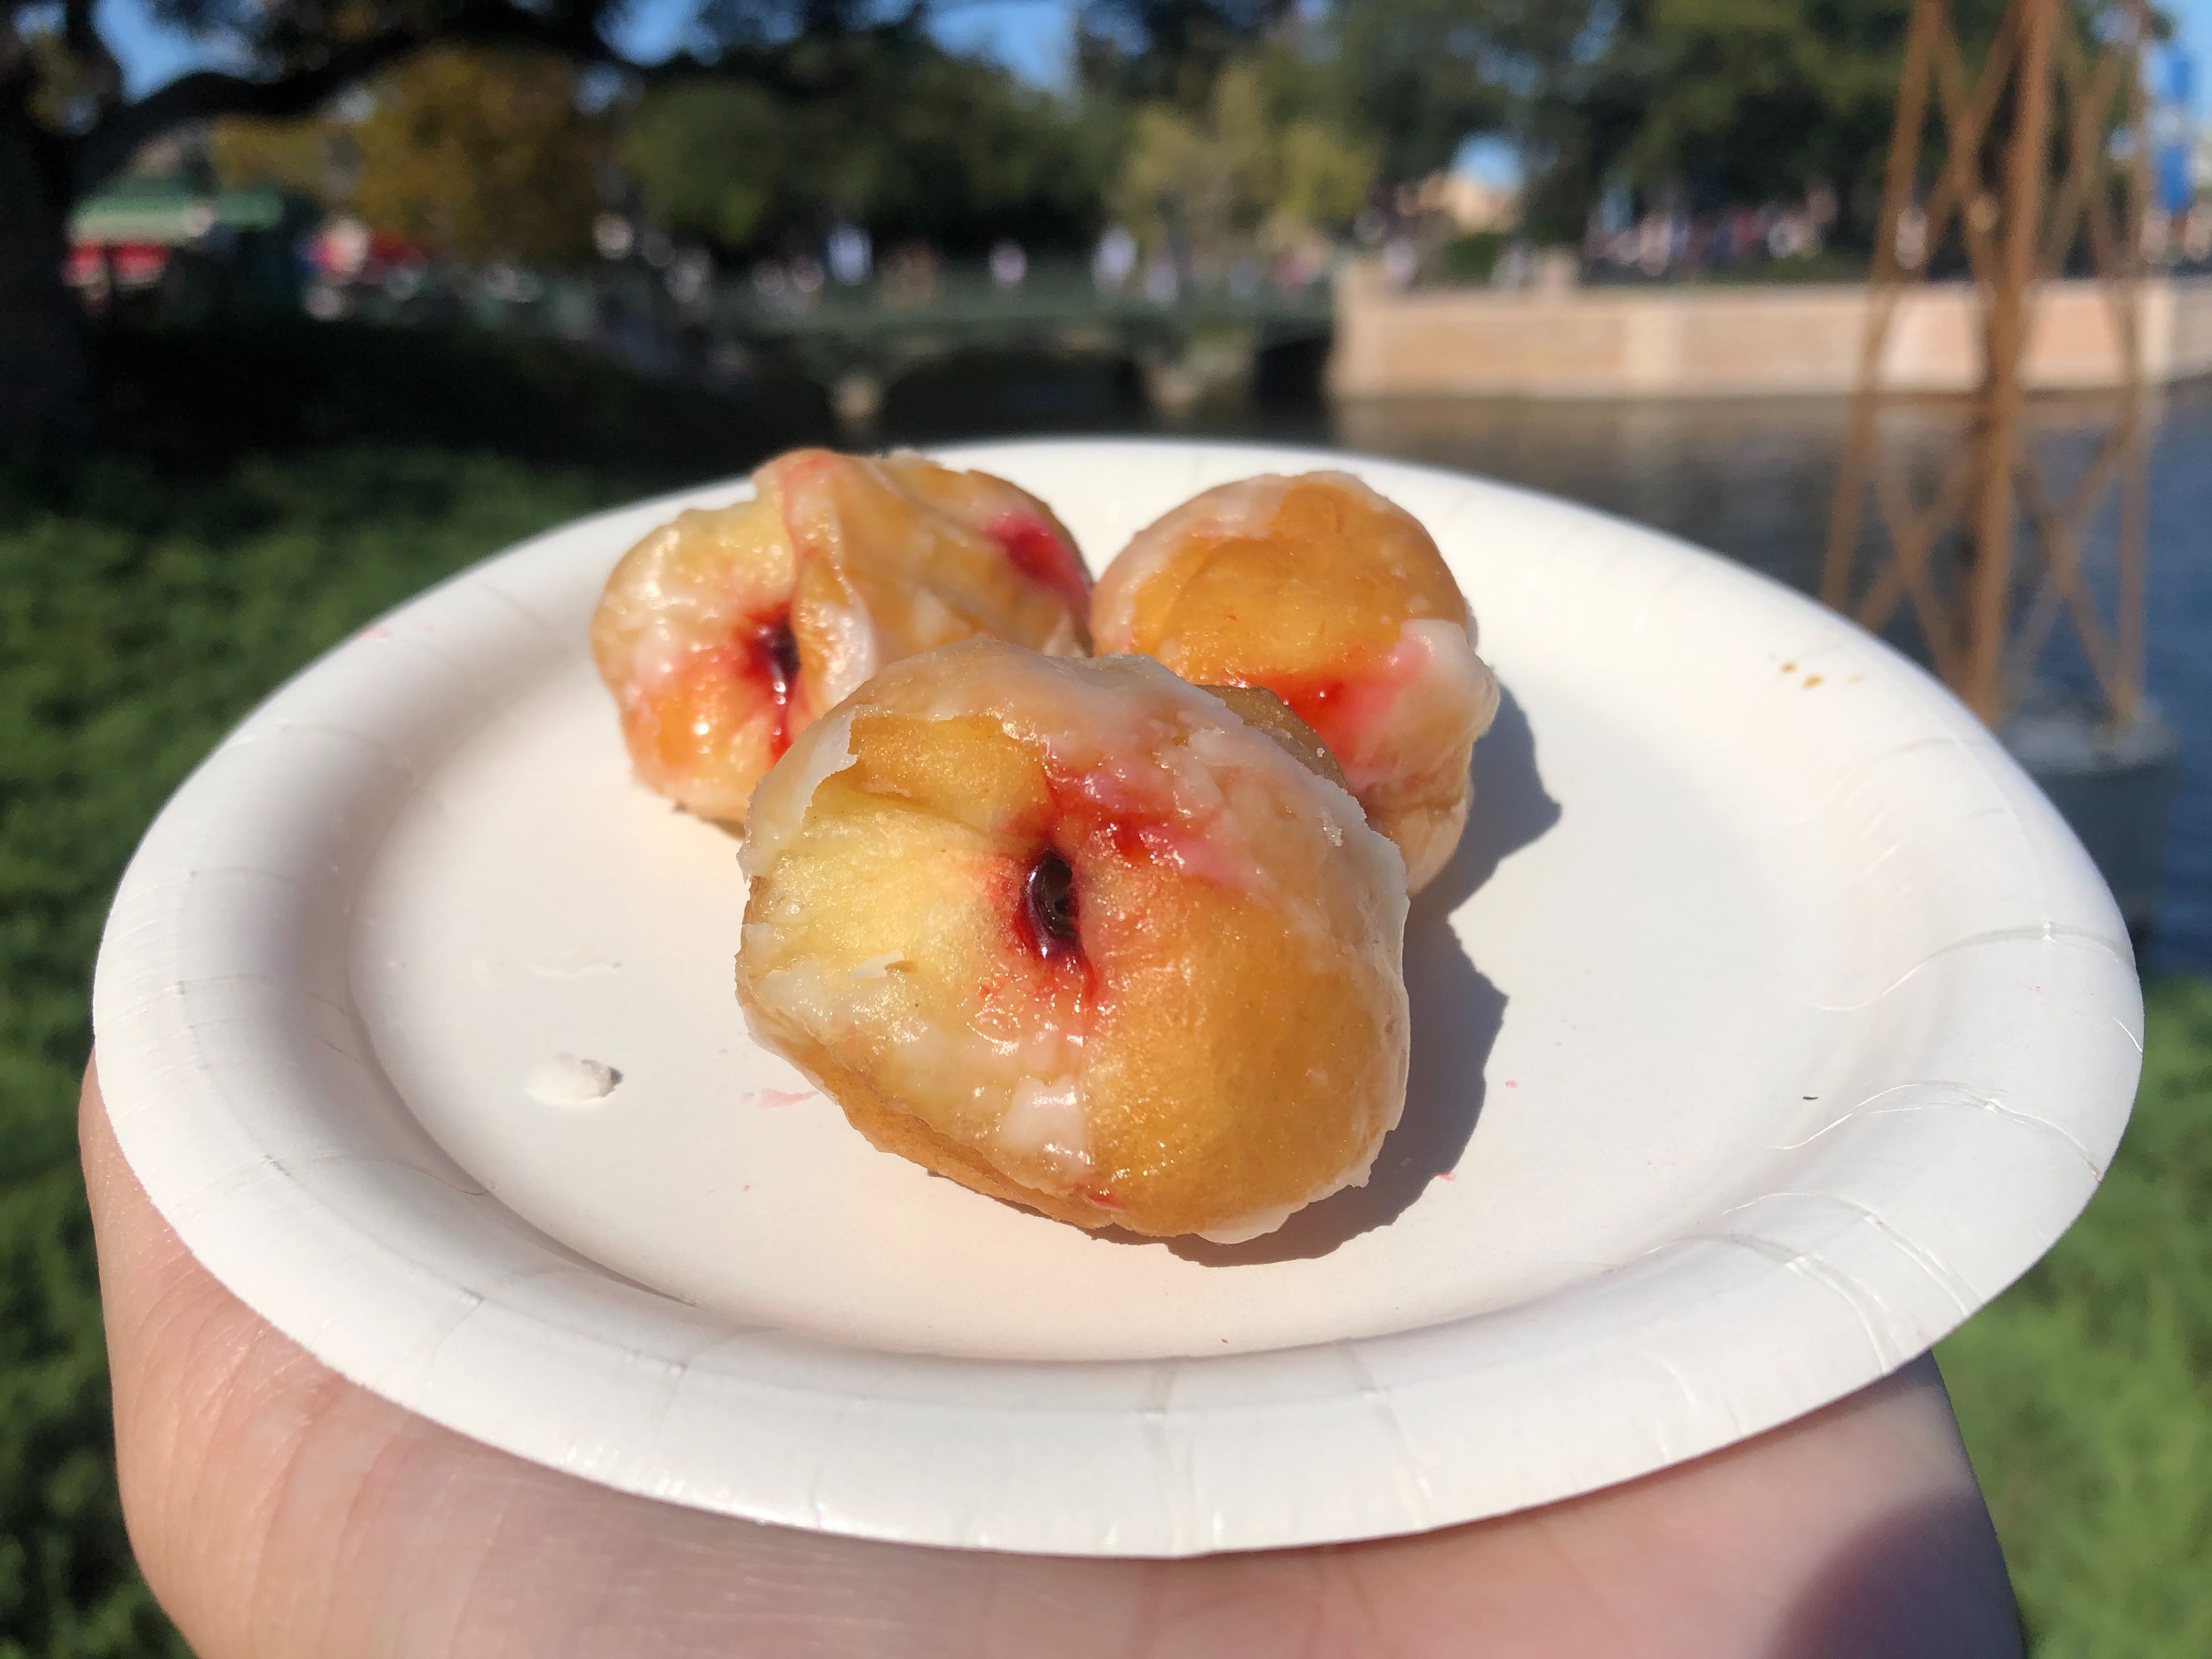 Sufganiyot: Mini Jelly-filled Donuts – $3.50